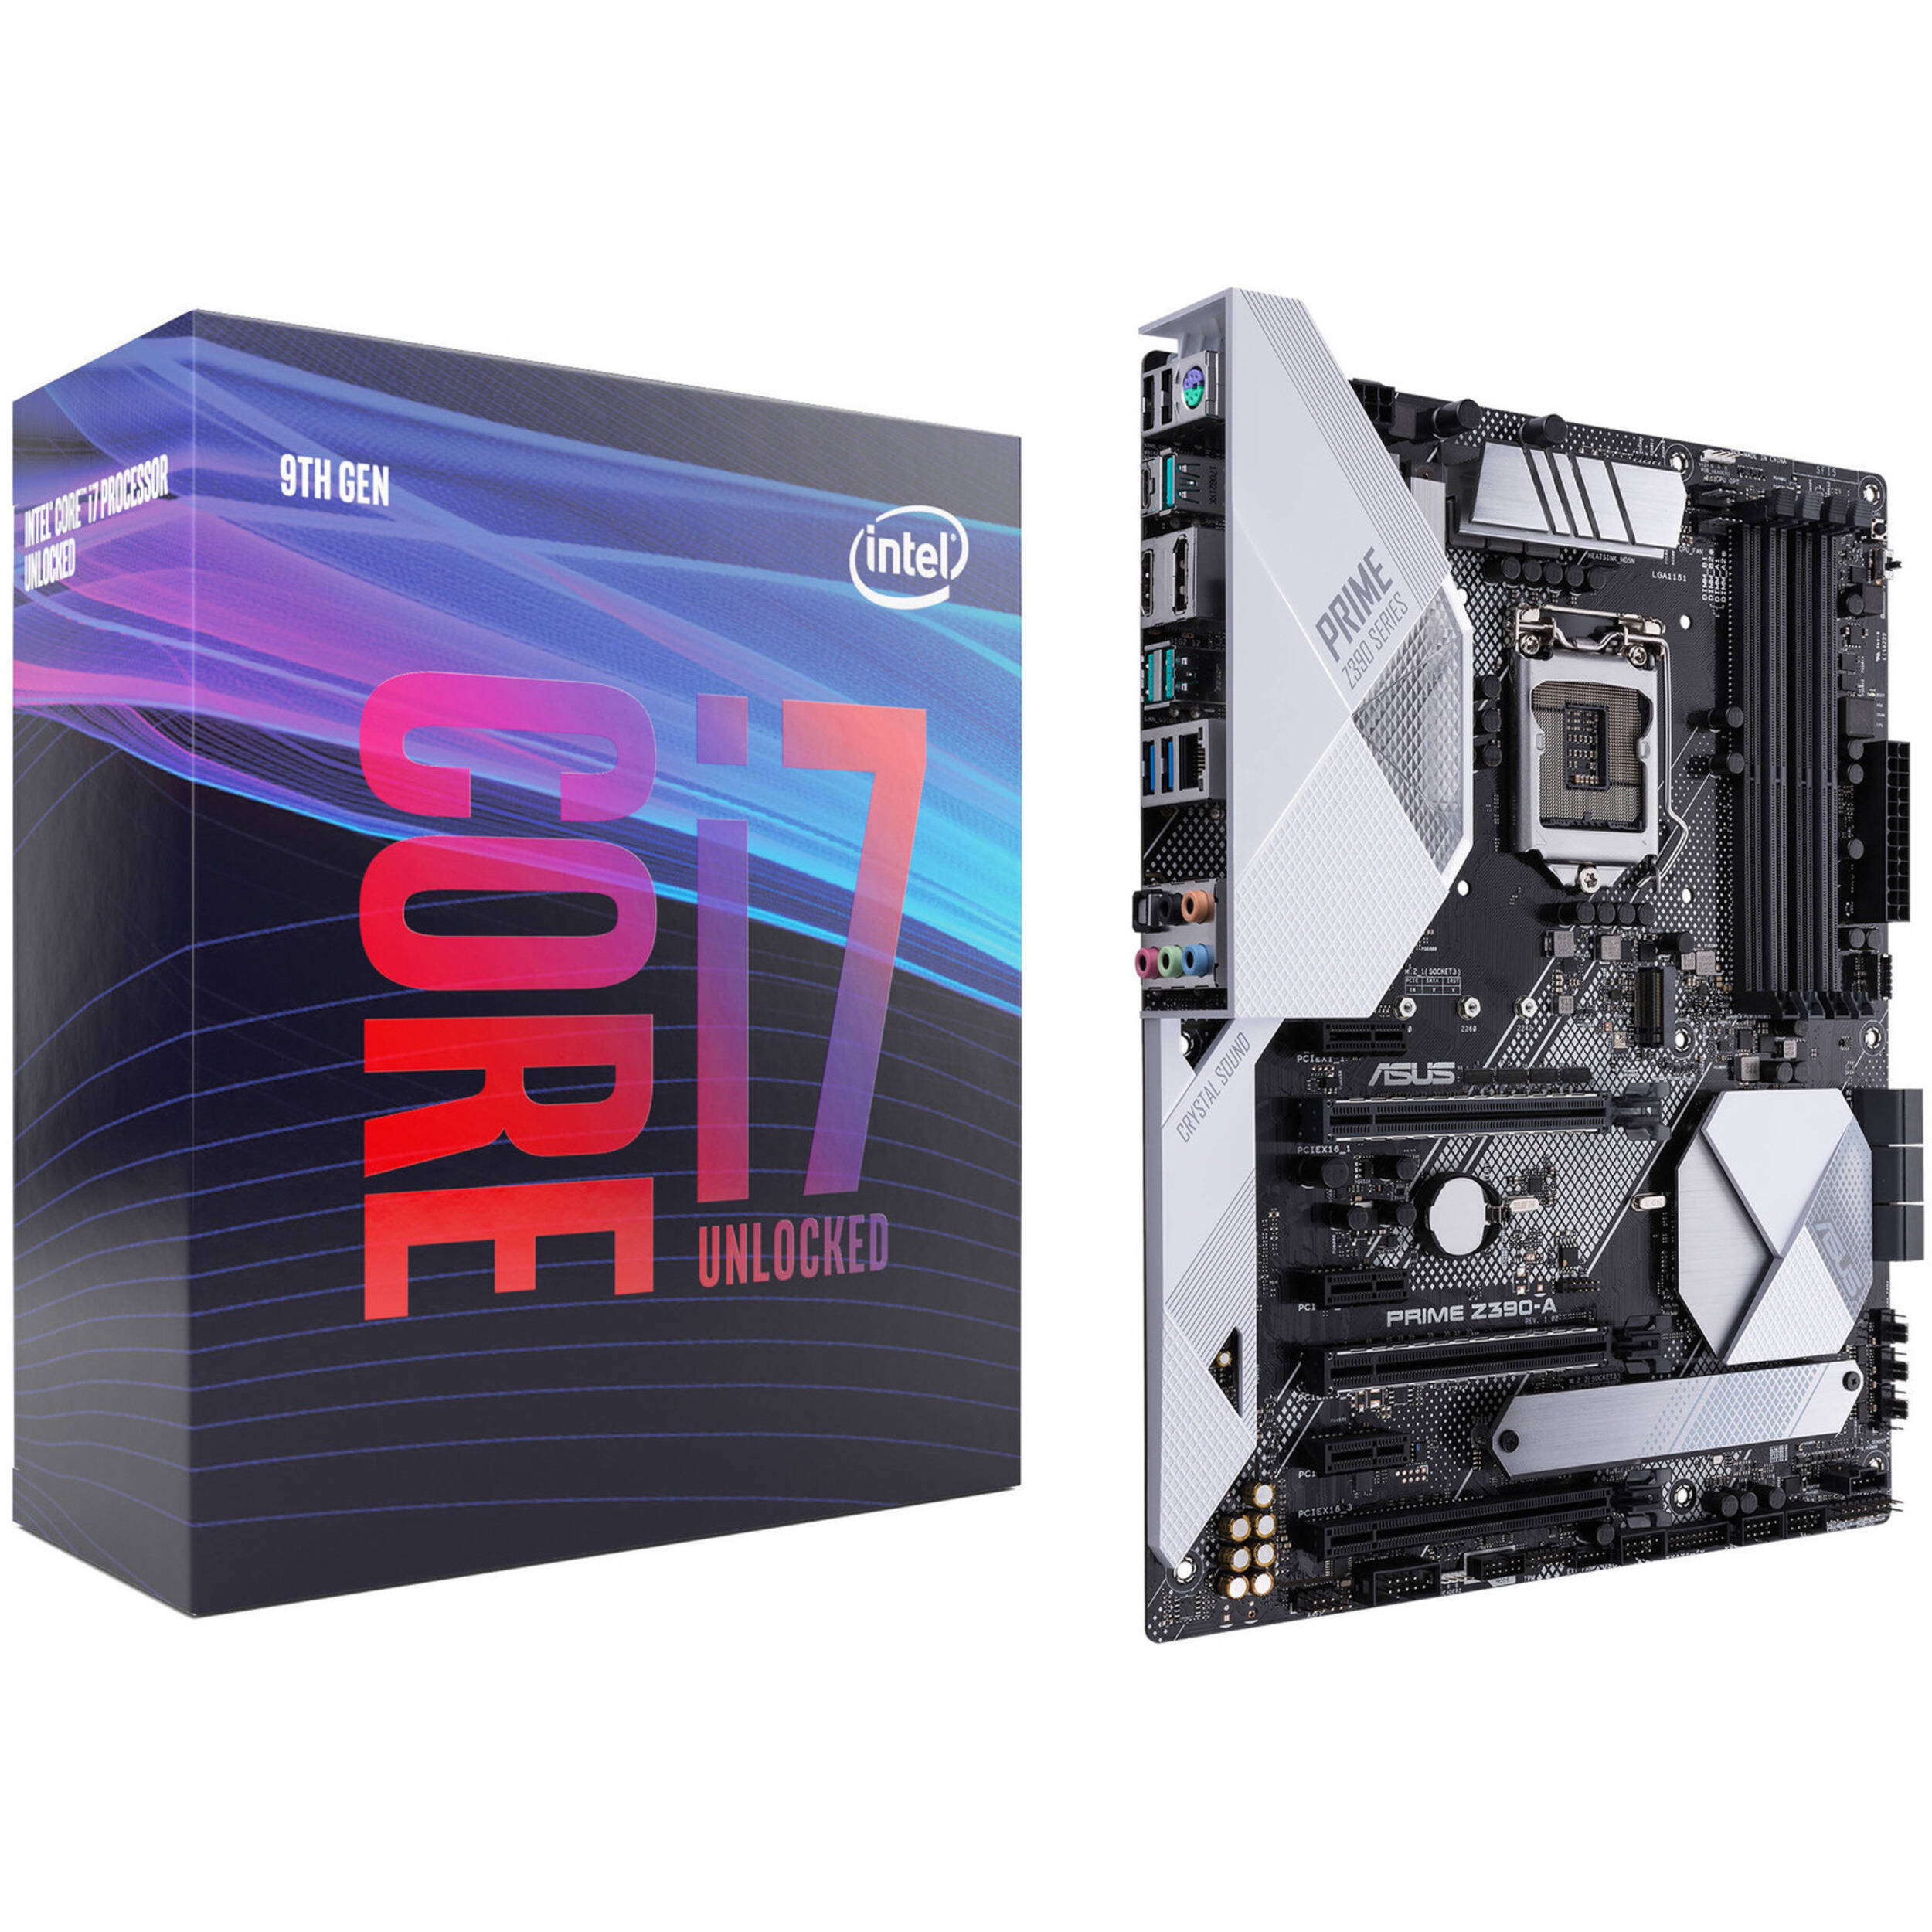 Intel Core i7-9700K 3.6 GHz Eight-Core 